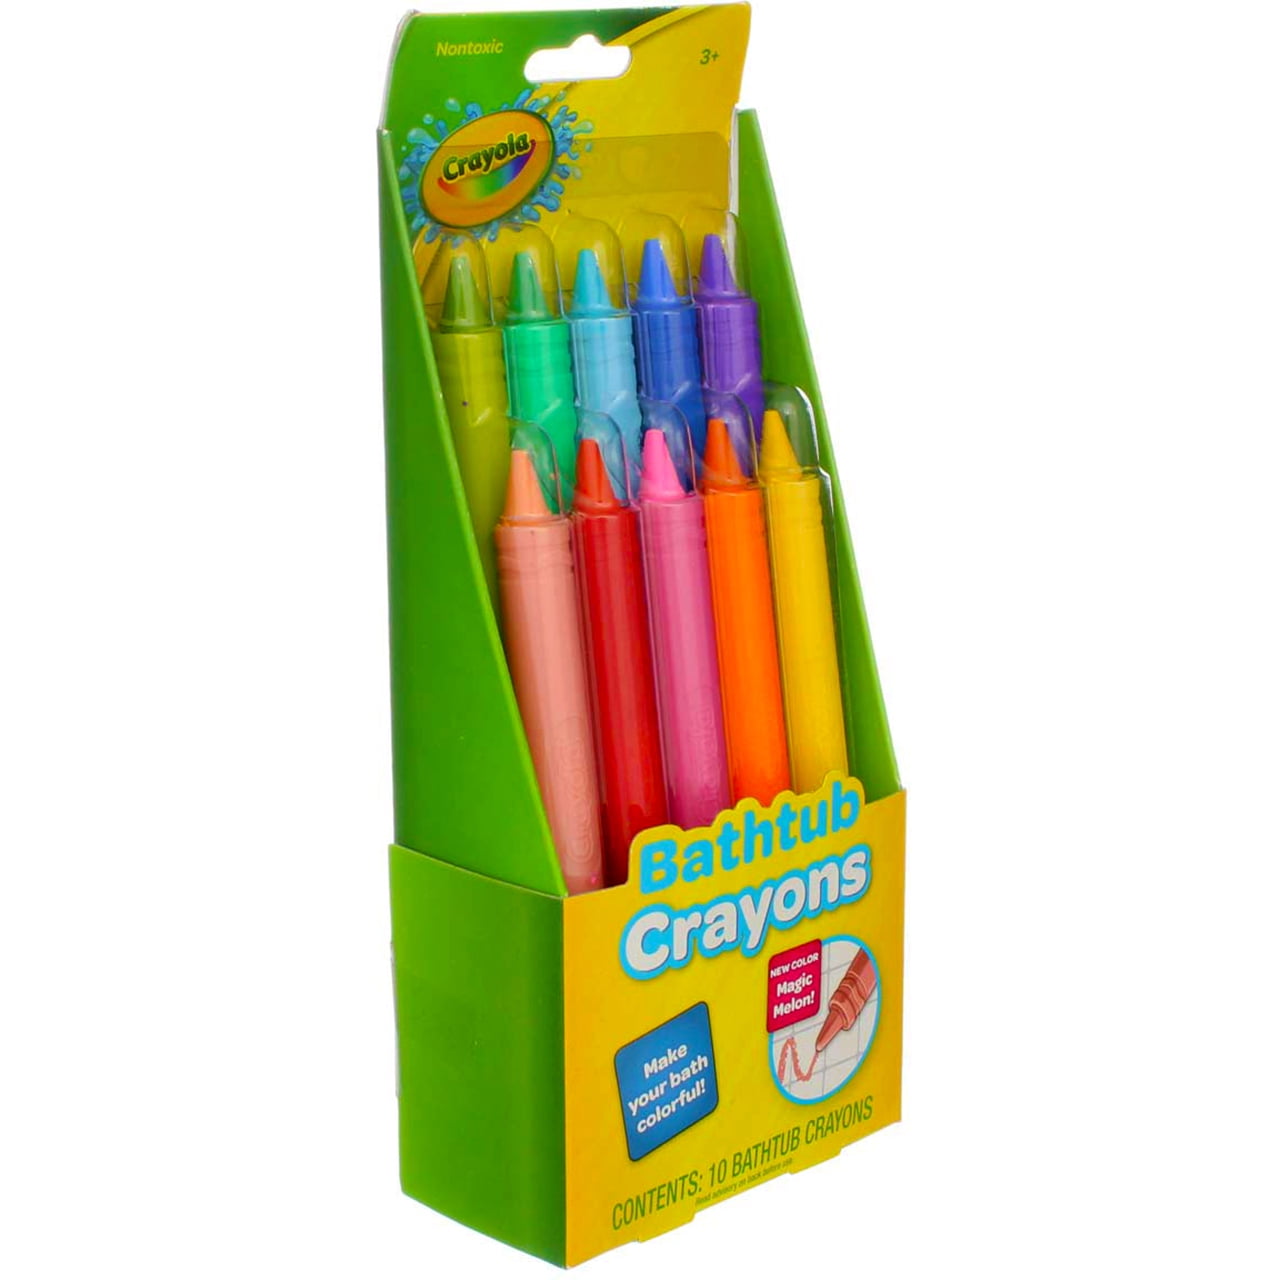 How To Make Crayons - Childhood Magic